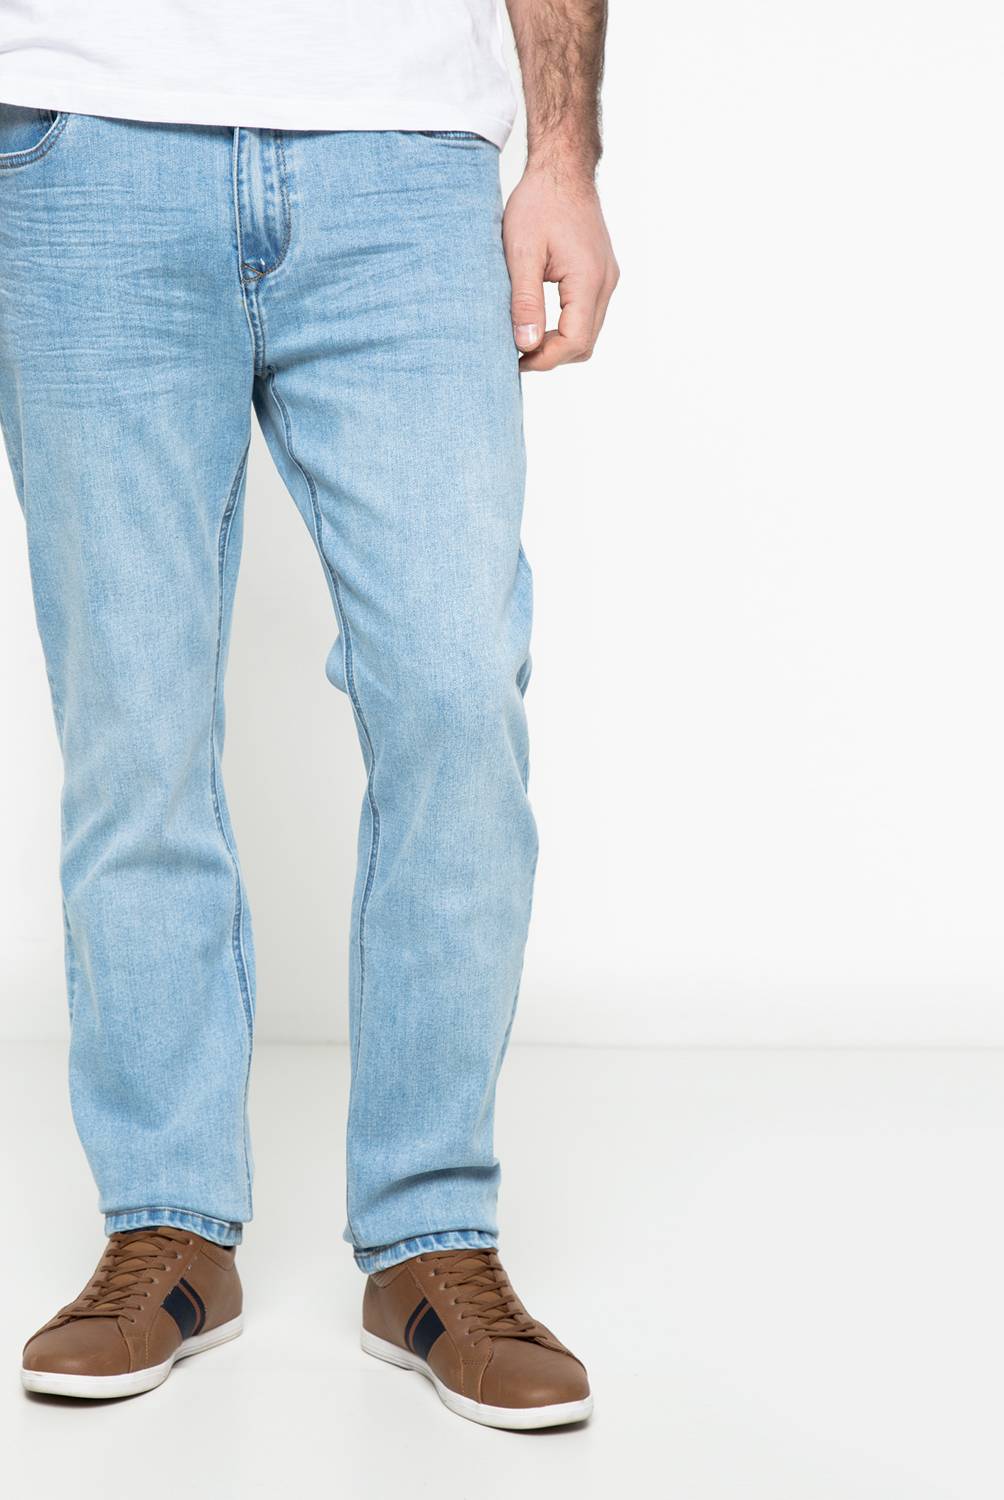 UNIVERSITY CLUB - Jeans Regular Fit Hombre